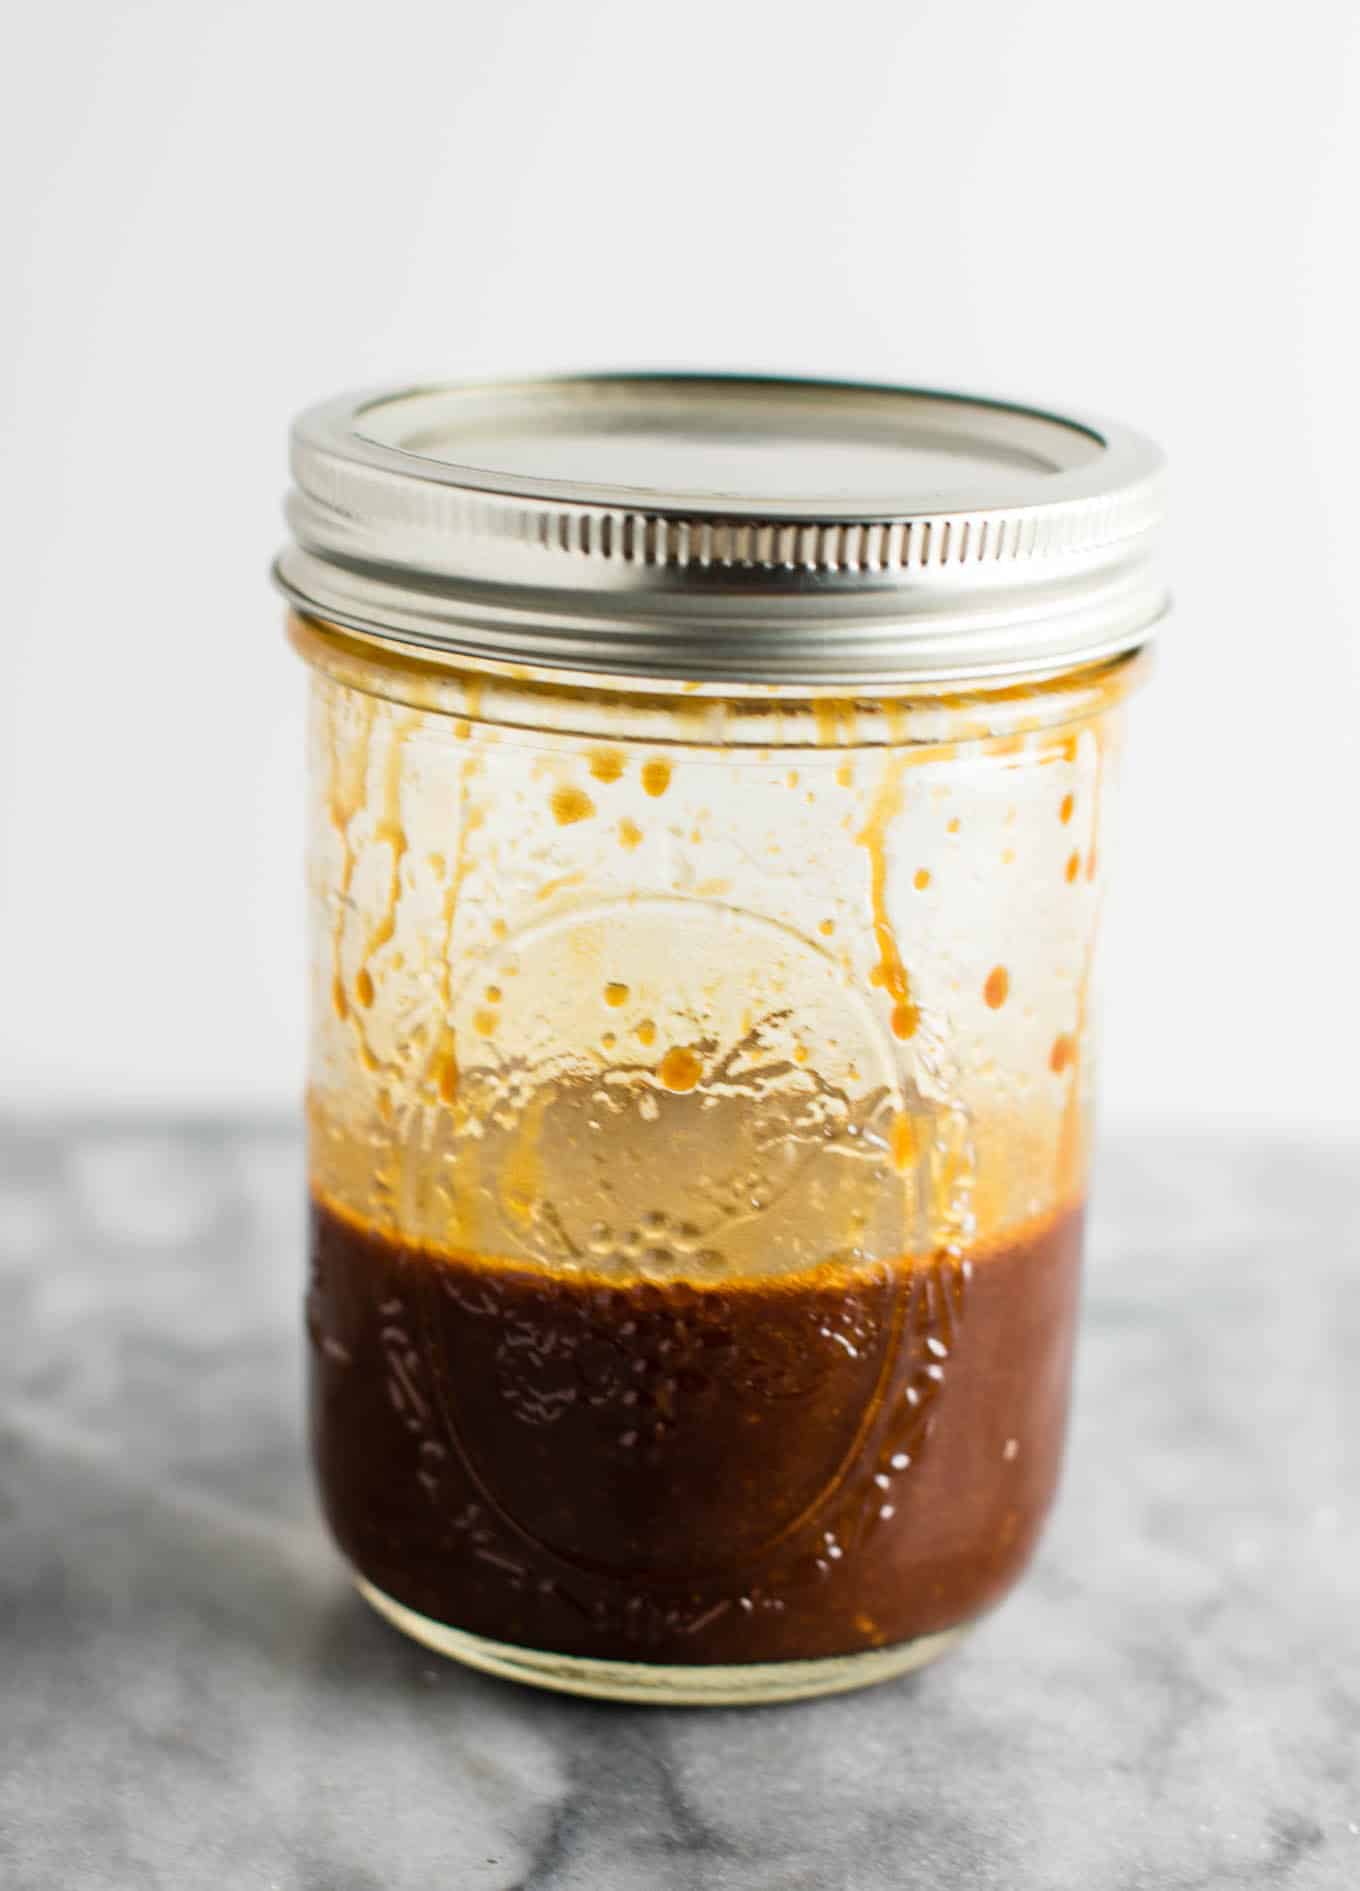 stir fry sauce in a mason jar with a lid